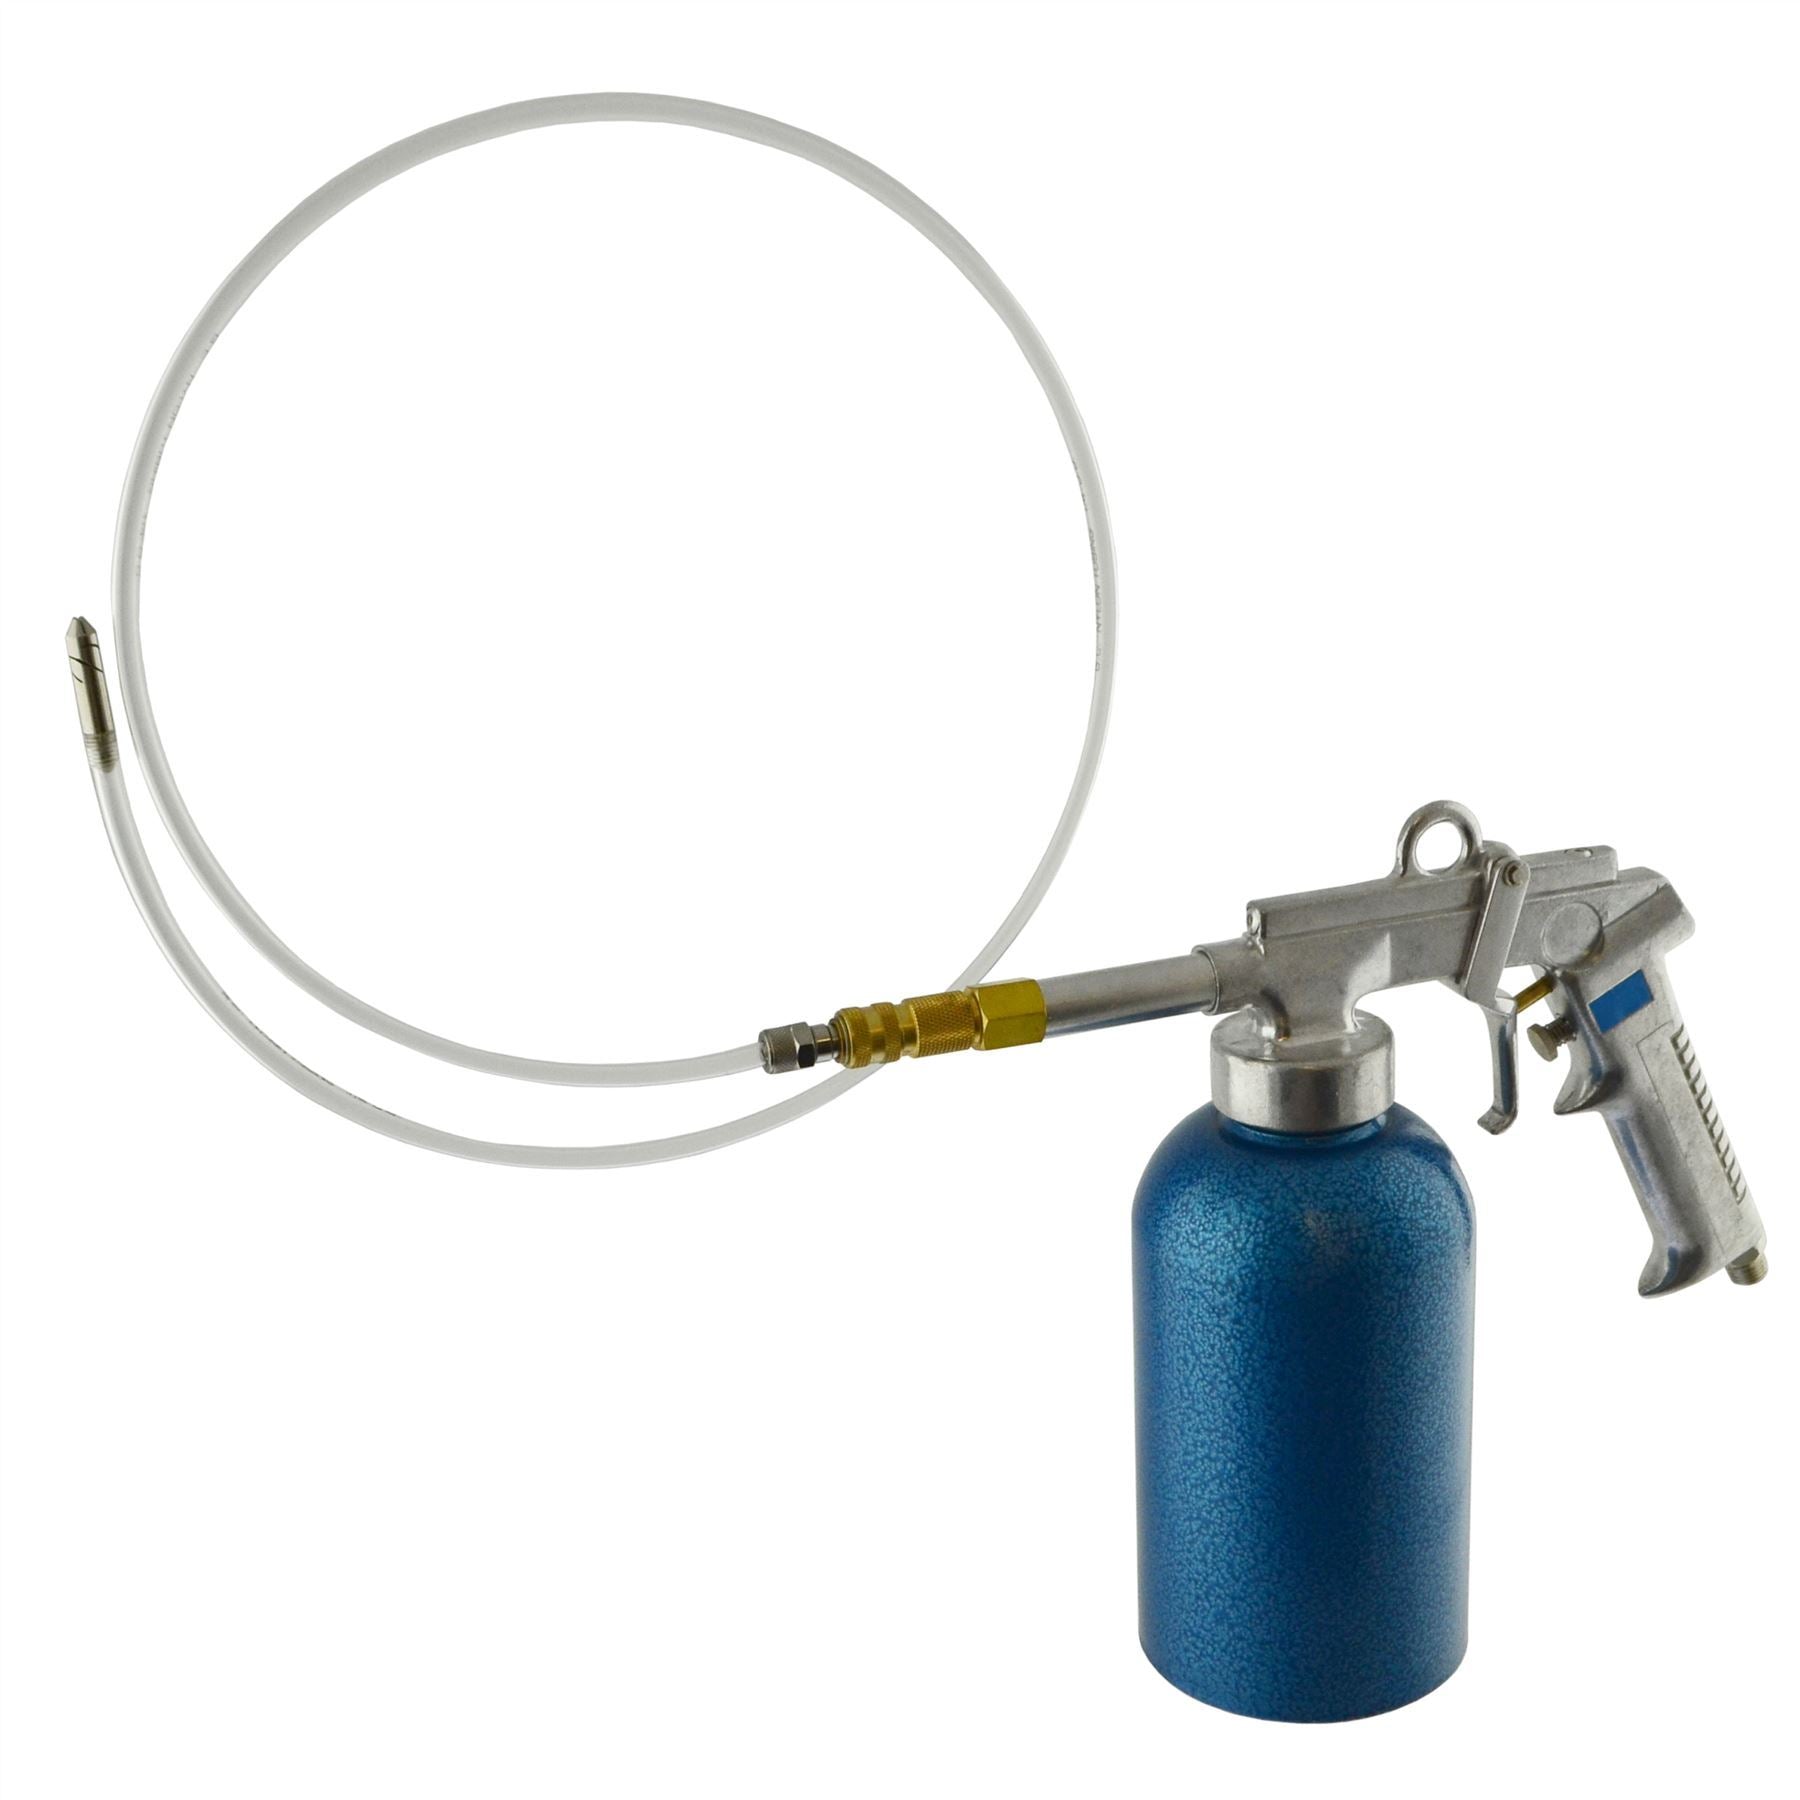 Professional Rust Proofing / Wax Injection Gun for Underseal & Waxoyl